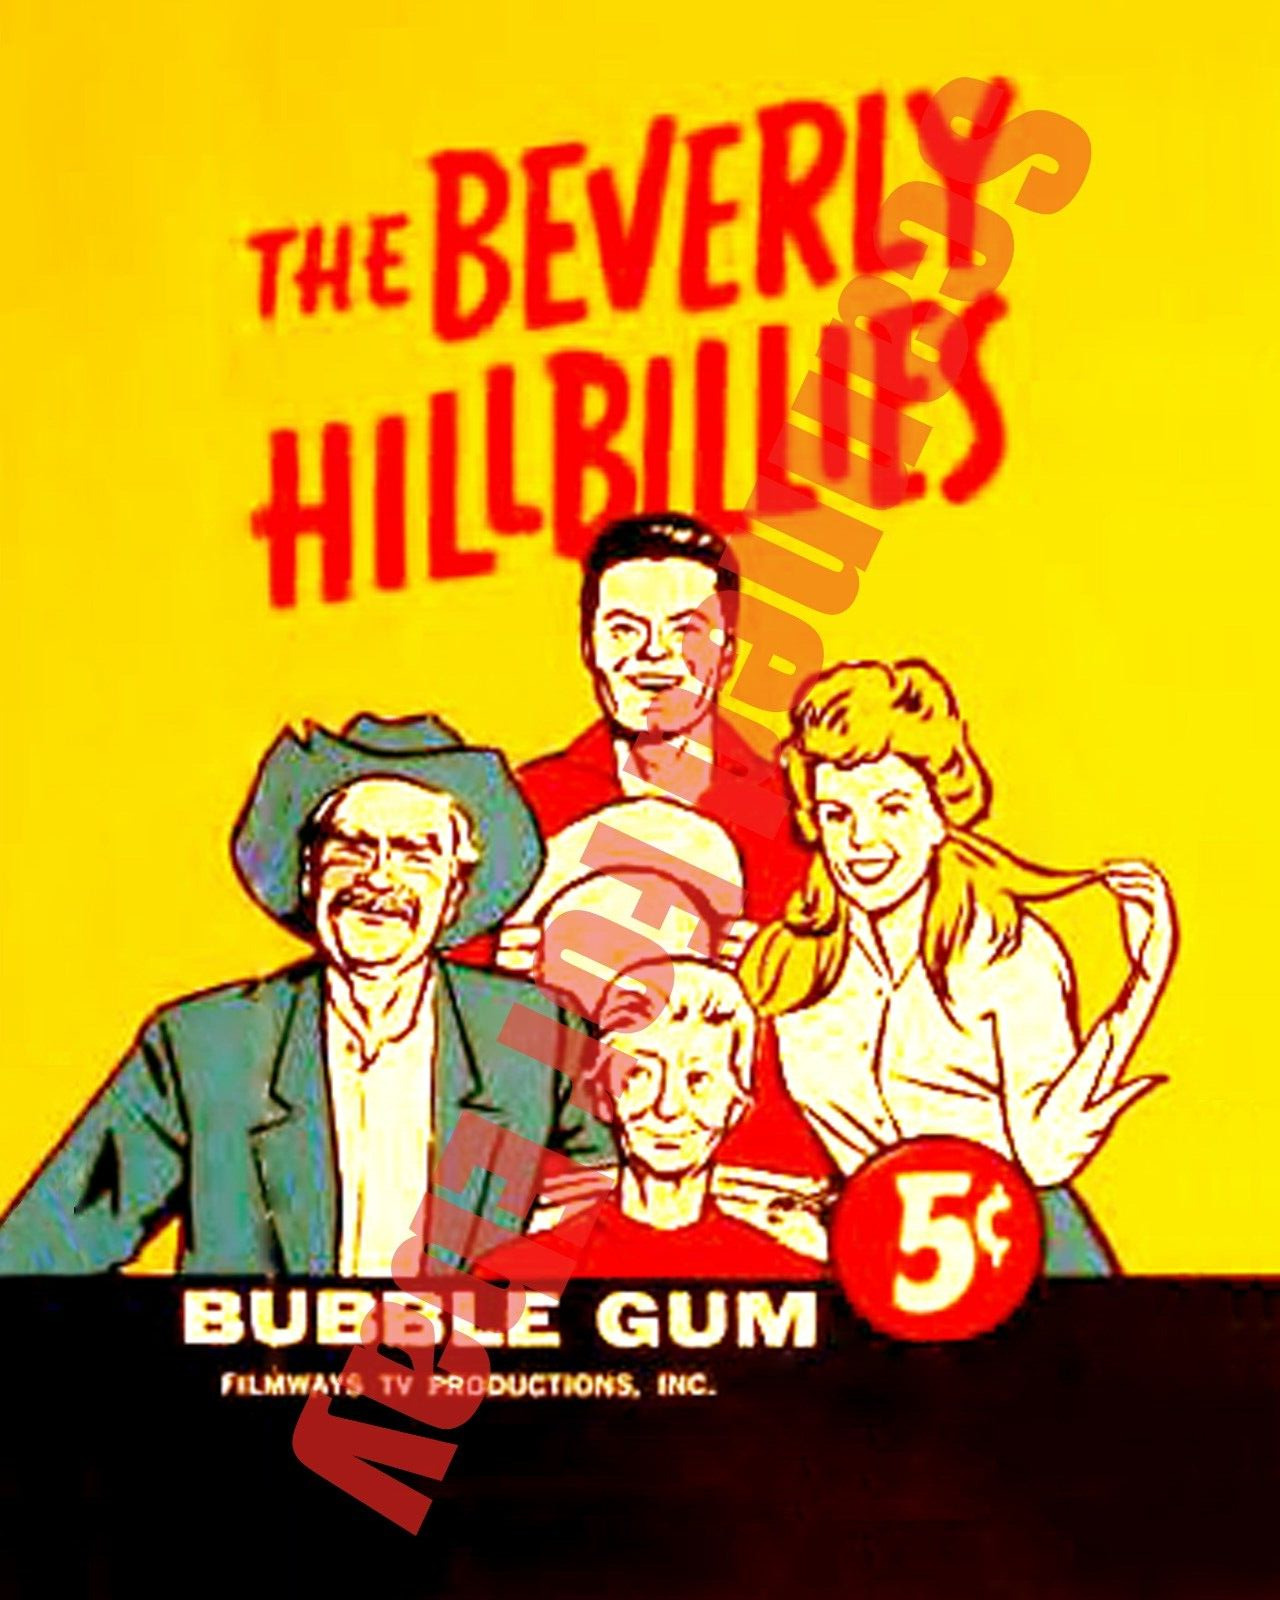 1963 TOPPS BEVERLY HILLBILLIES TV Show Card Wax Pack Wrapper 8x10 Photo